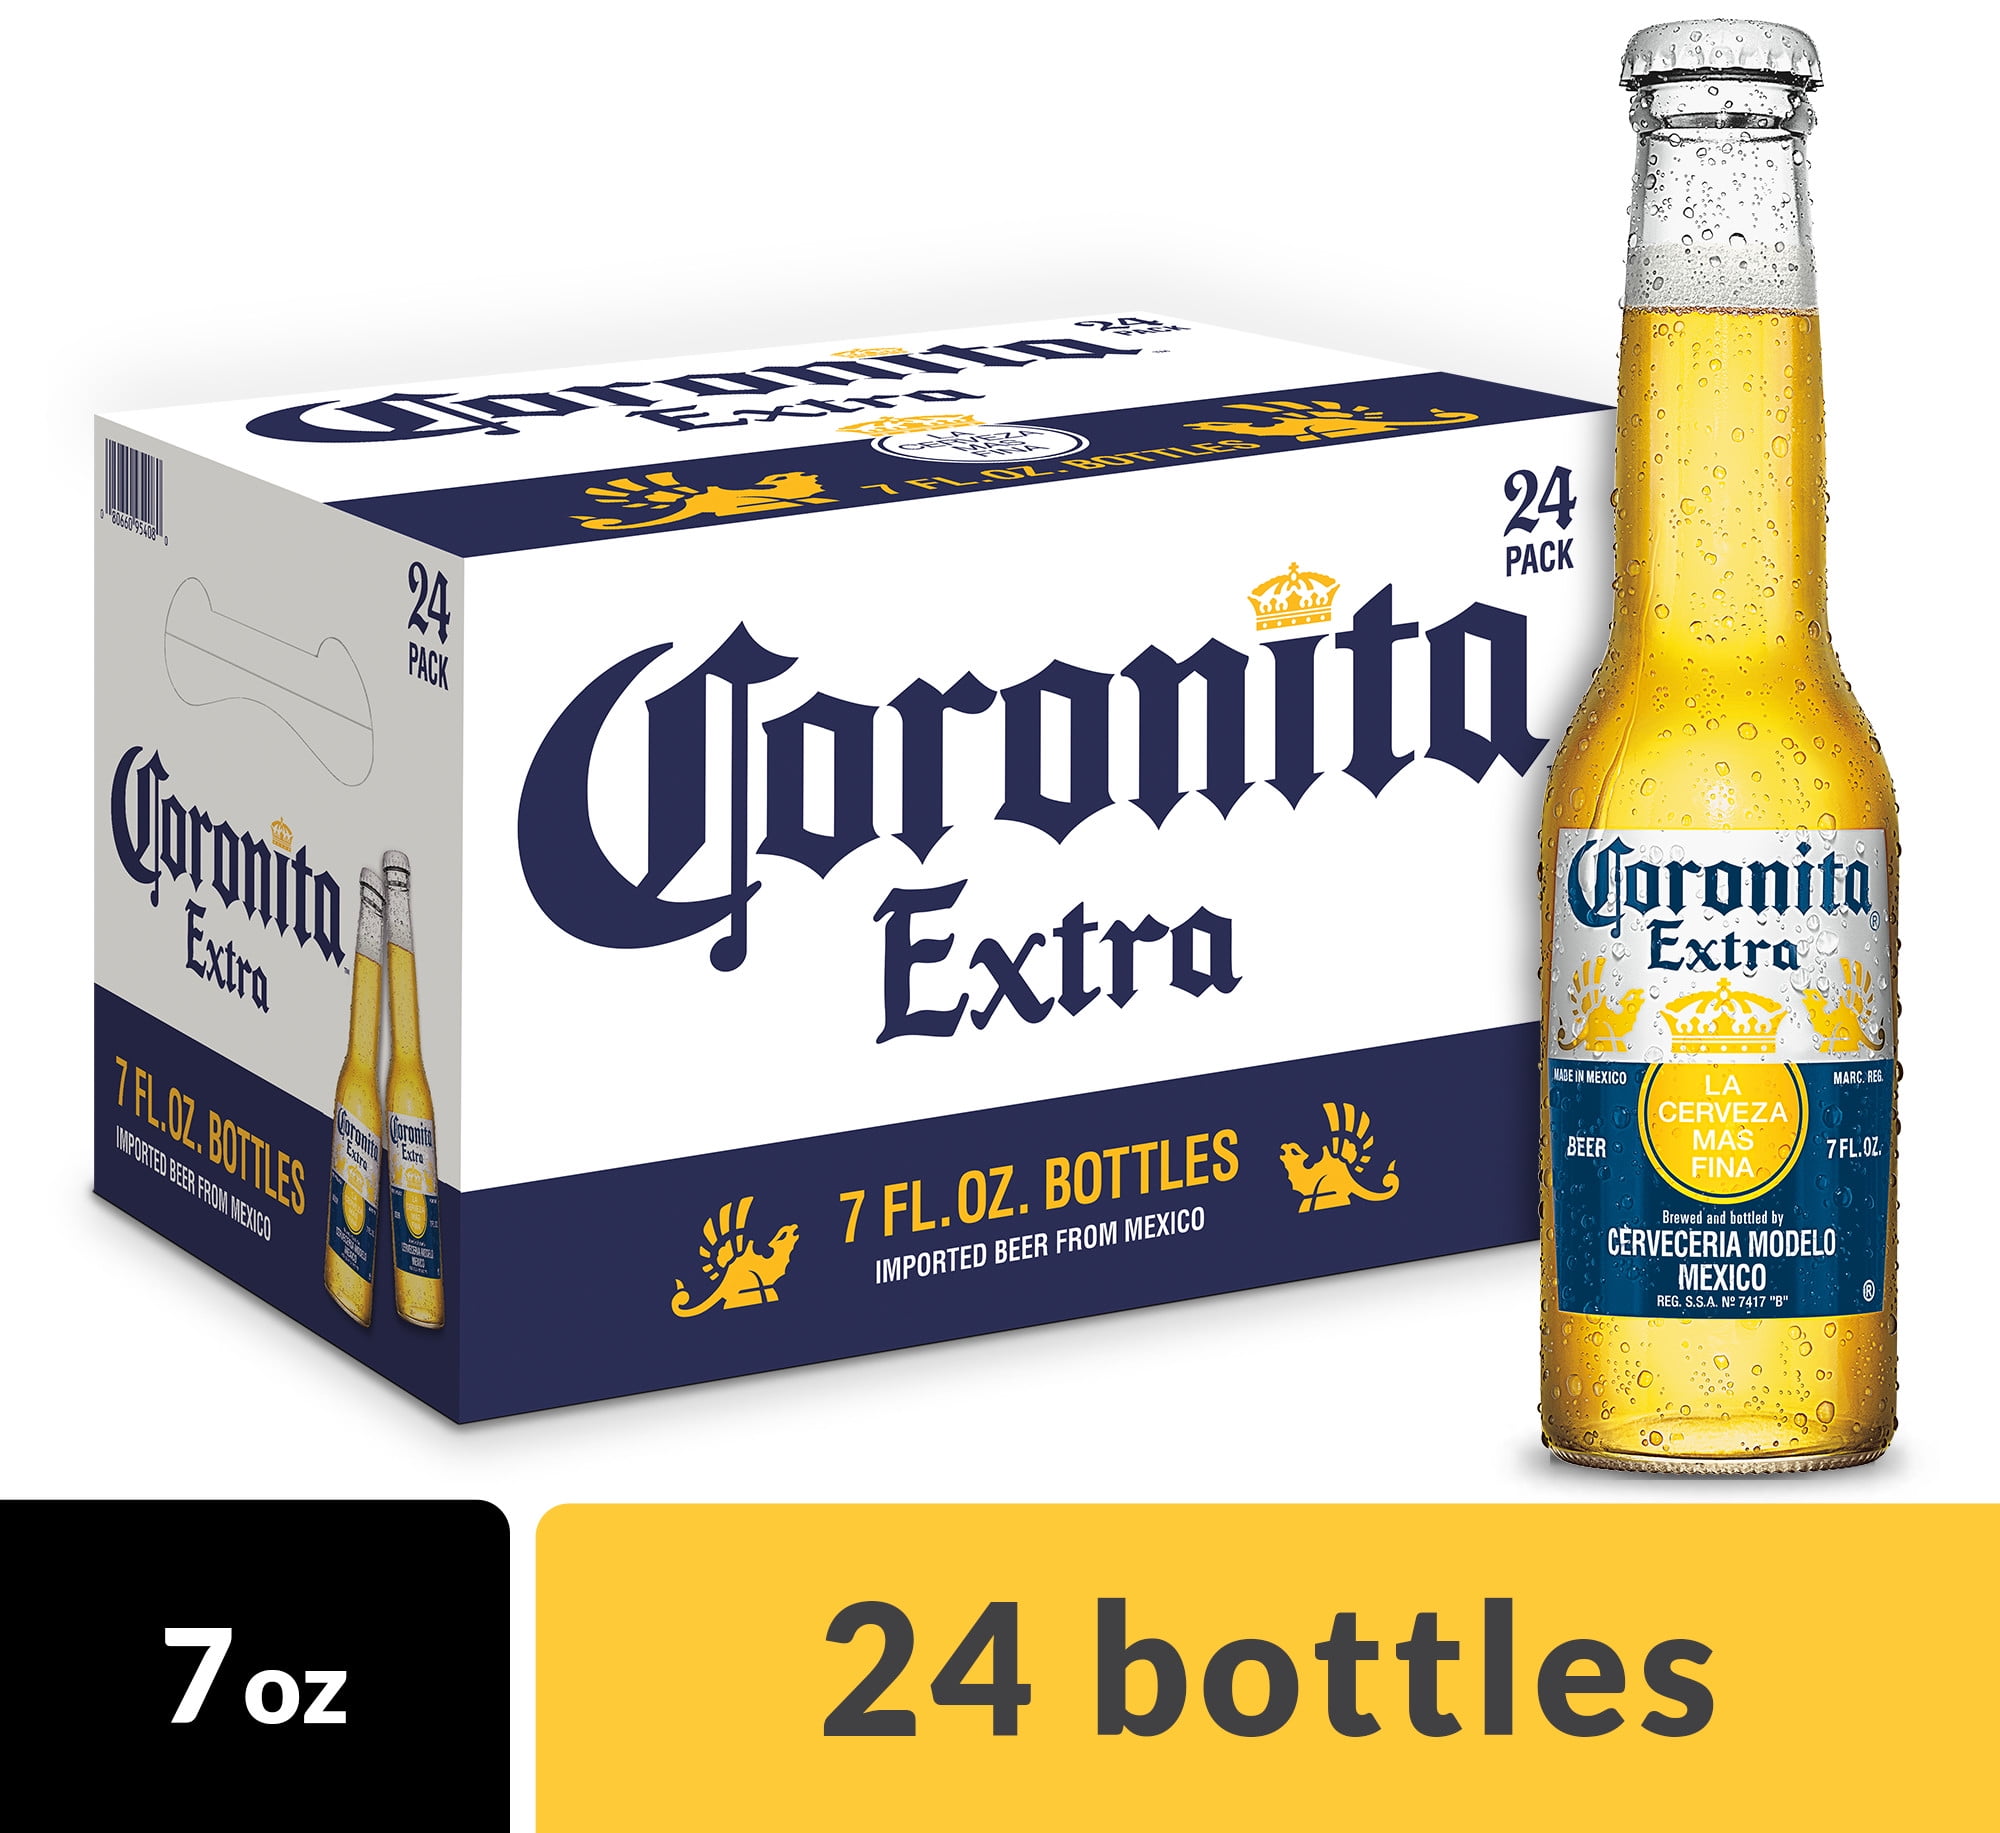 Corona Extra Coronita Mexican Lager Beer, 24 pk 7 fl oz Bottles, 4.6